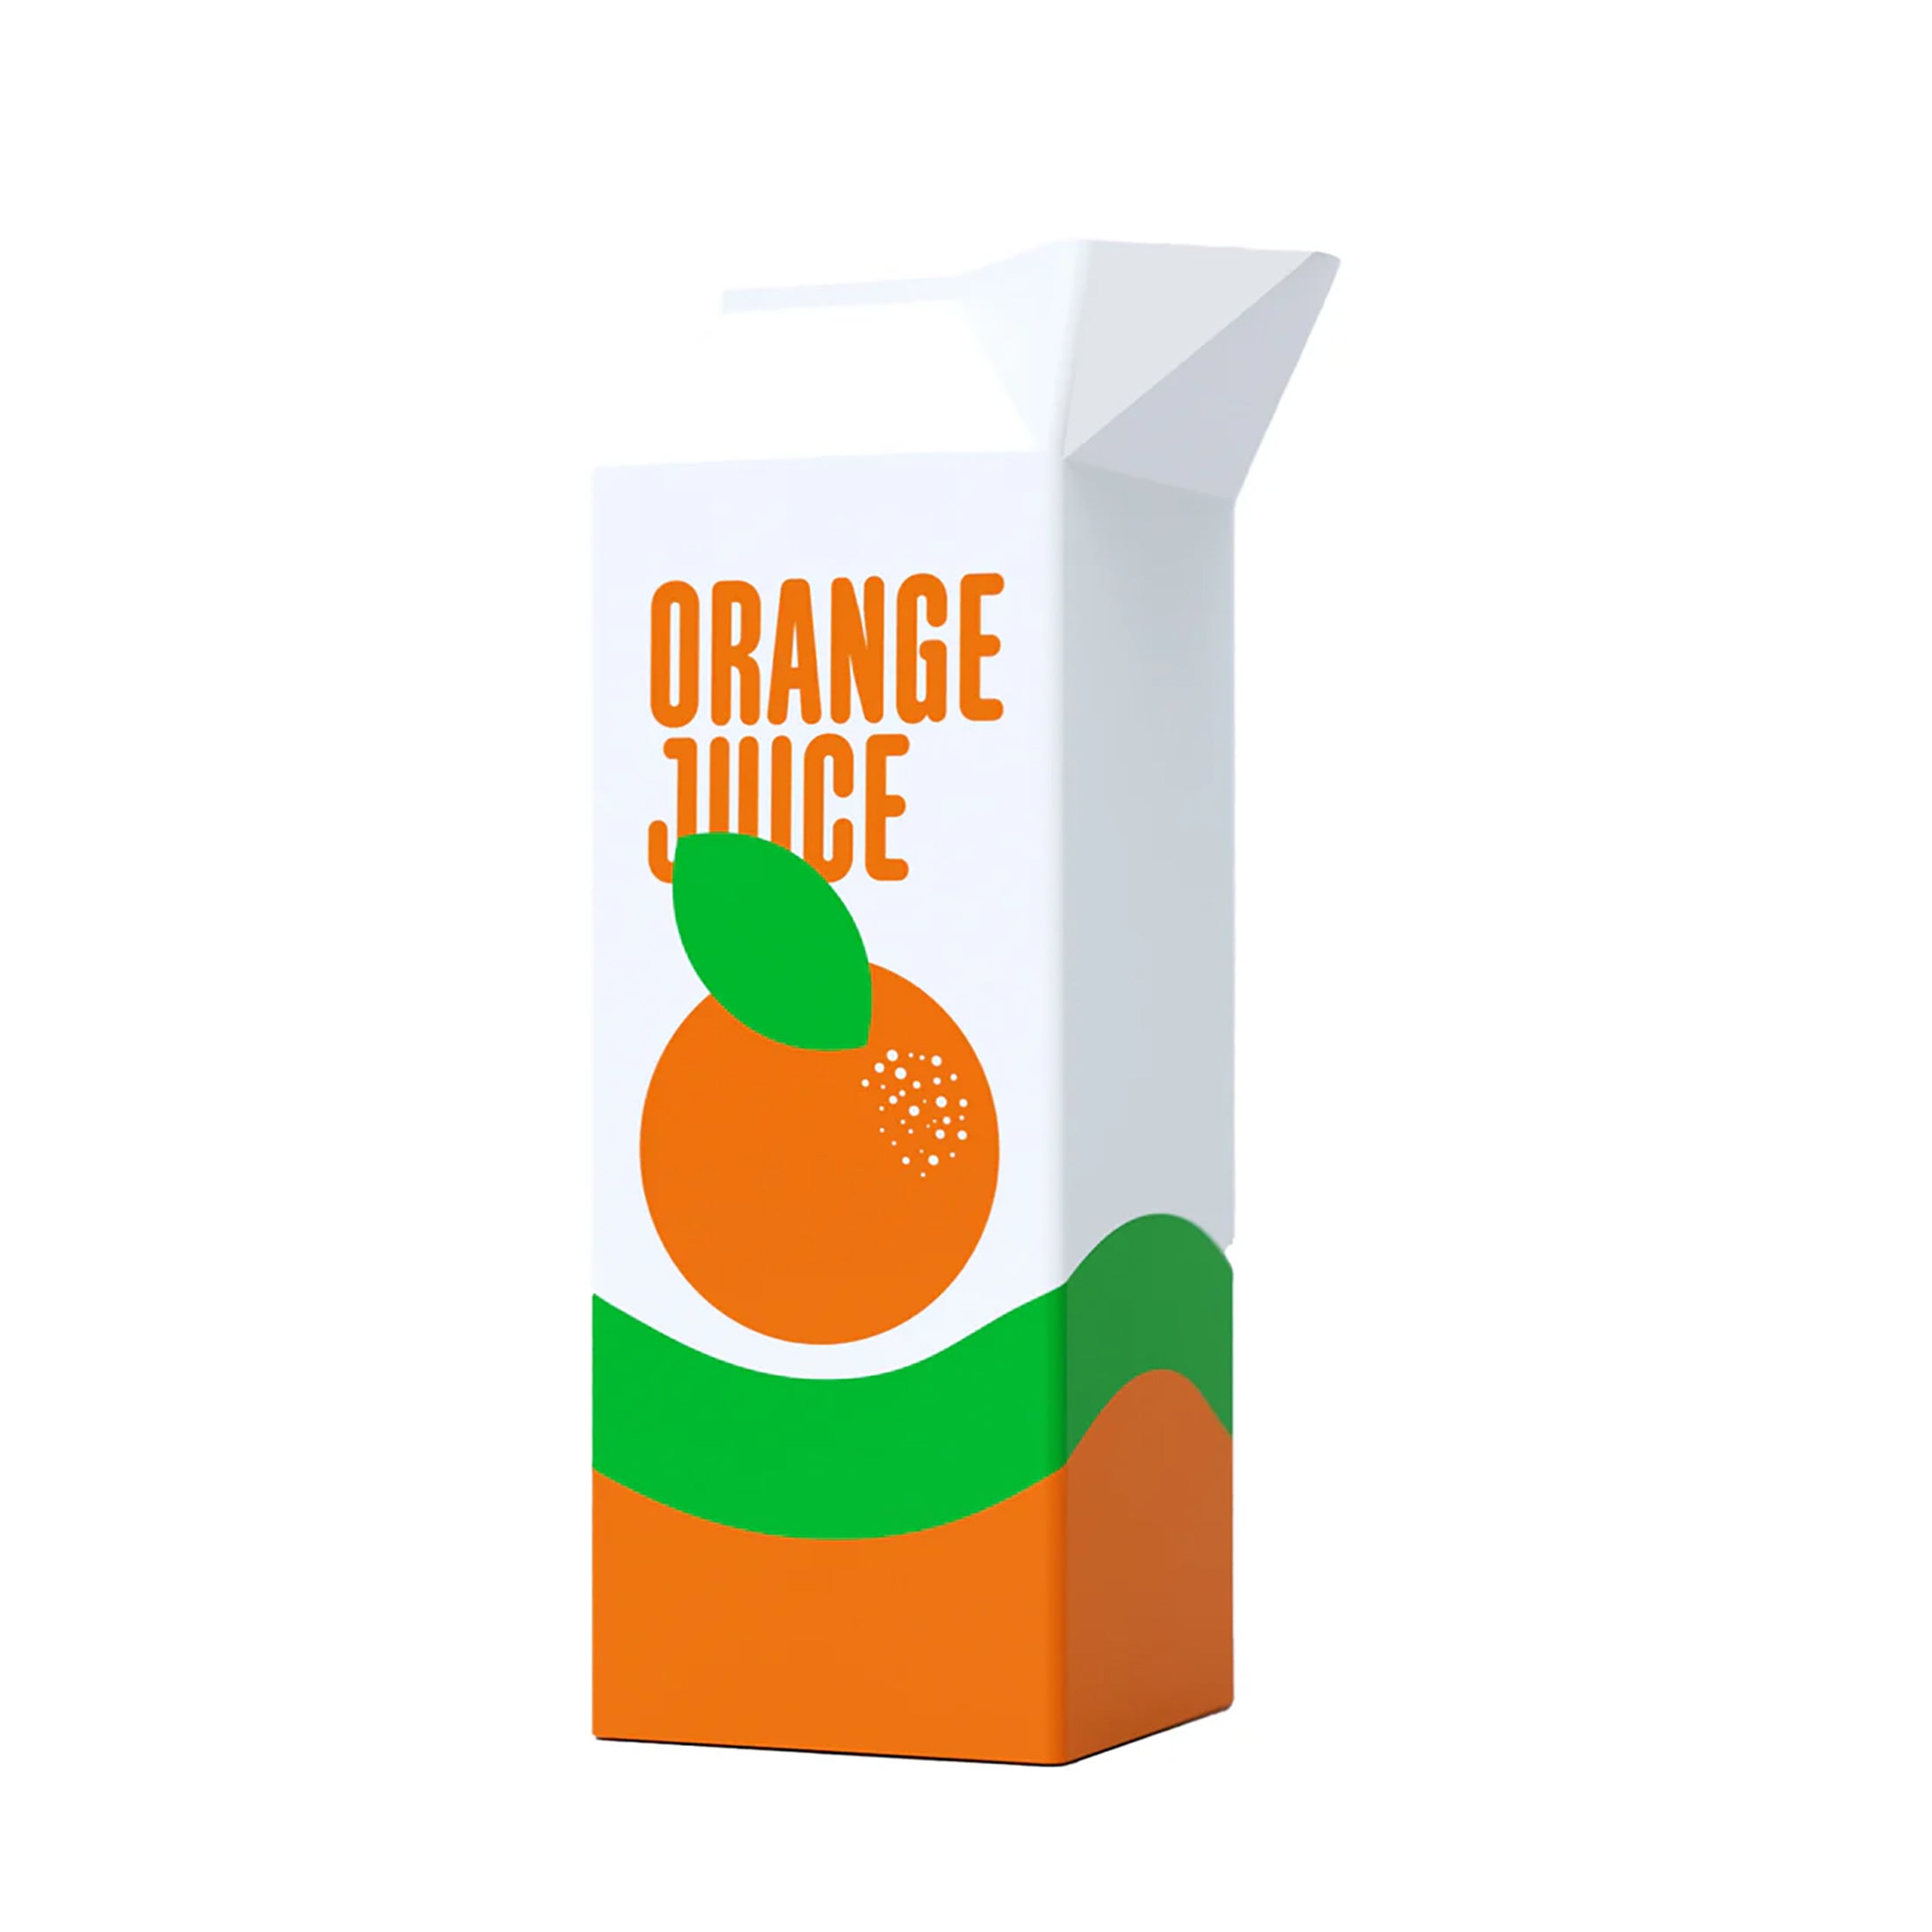 Herring & Bones - Concept Store Joyeux - Fluid Market - Vase - Vase "Jus d'orange"